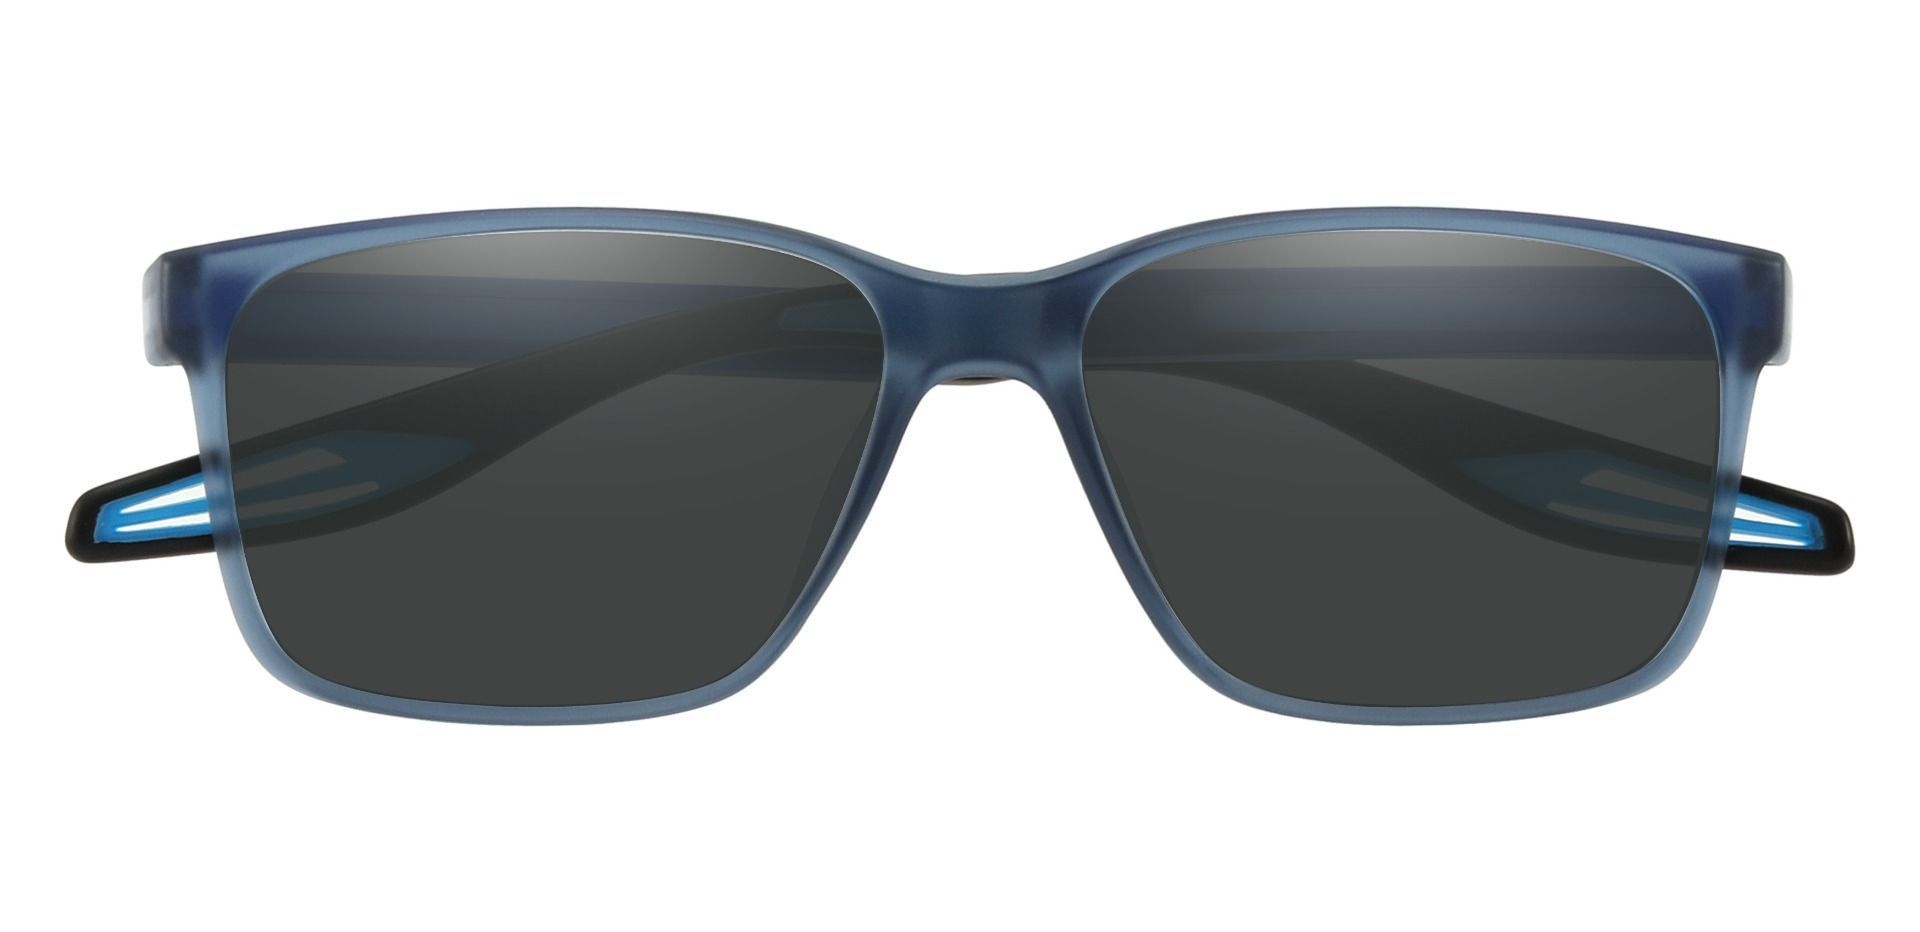 Nathan Rectangle Prescription Sunglasses - Blue Frame With Gray Lenses